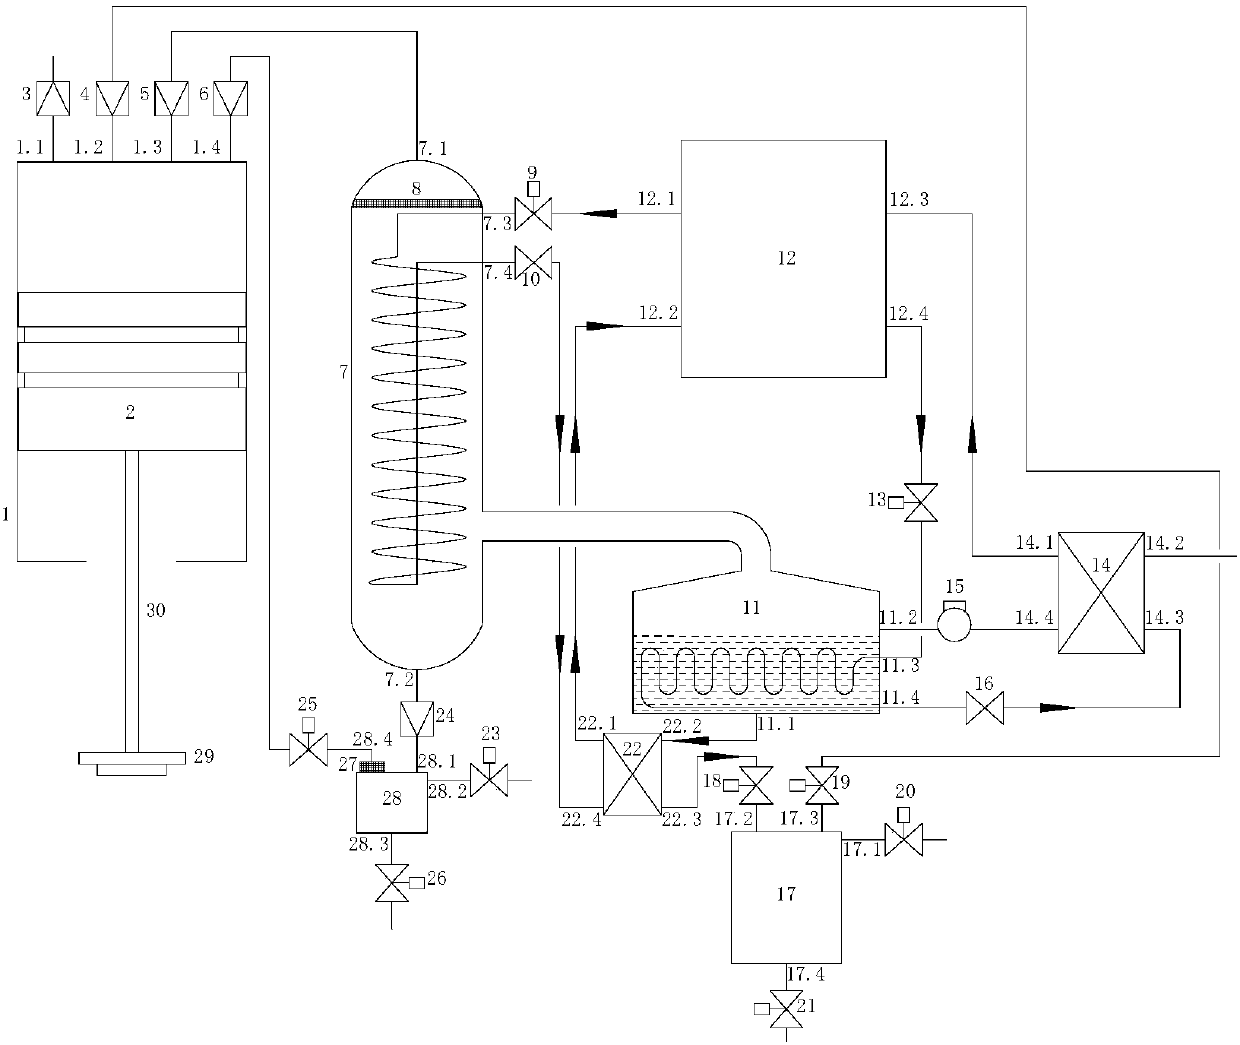 A vacuum-based salt solution heat pump regeneration system